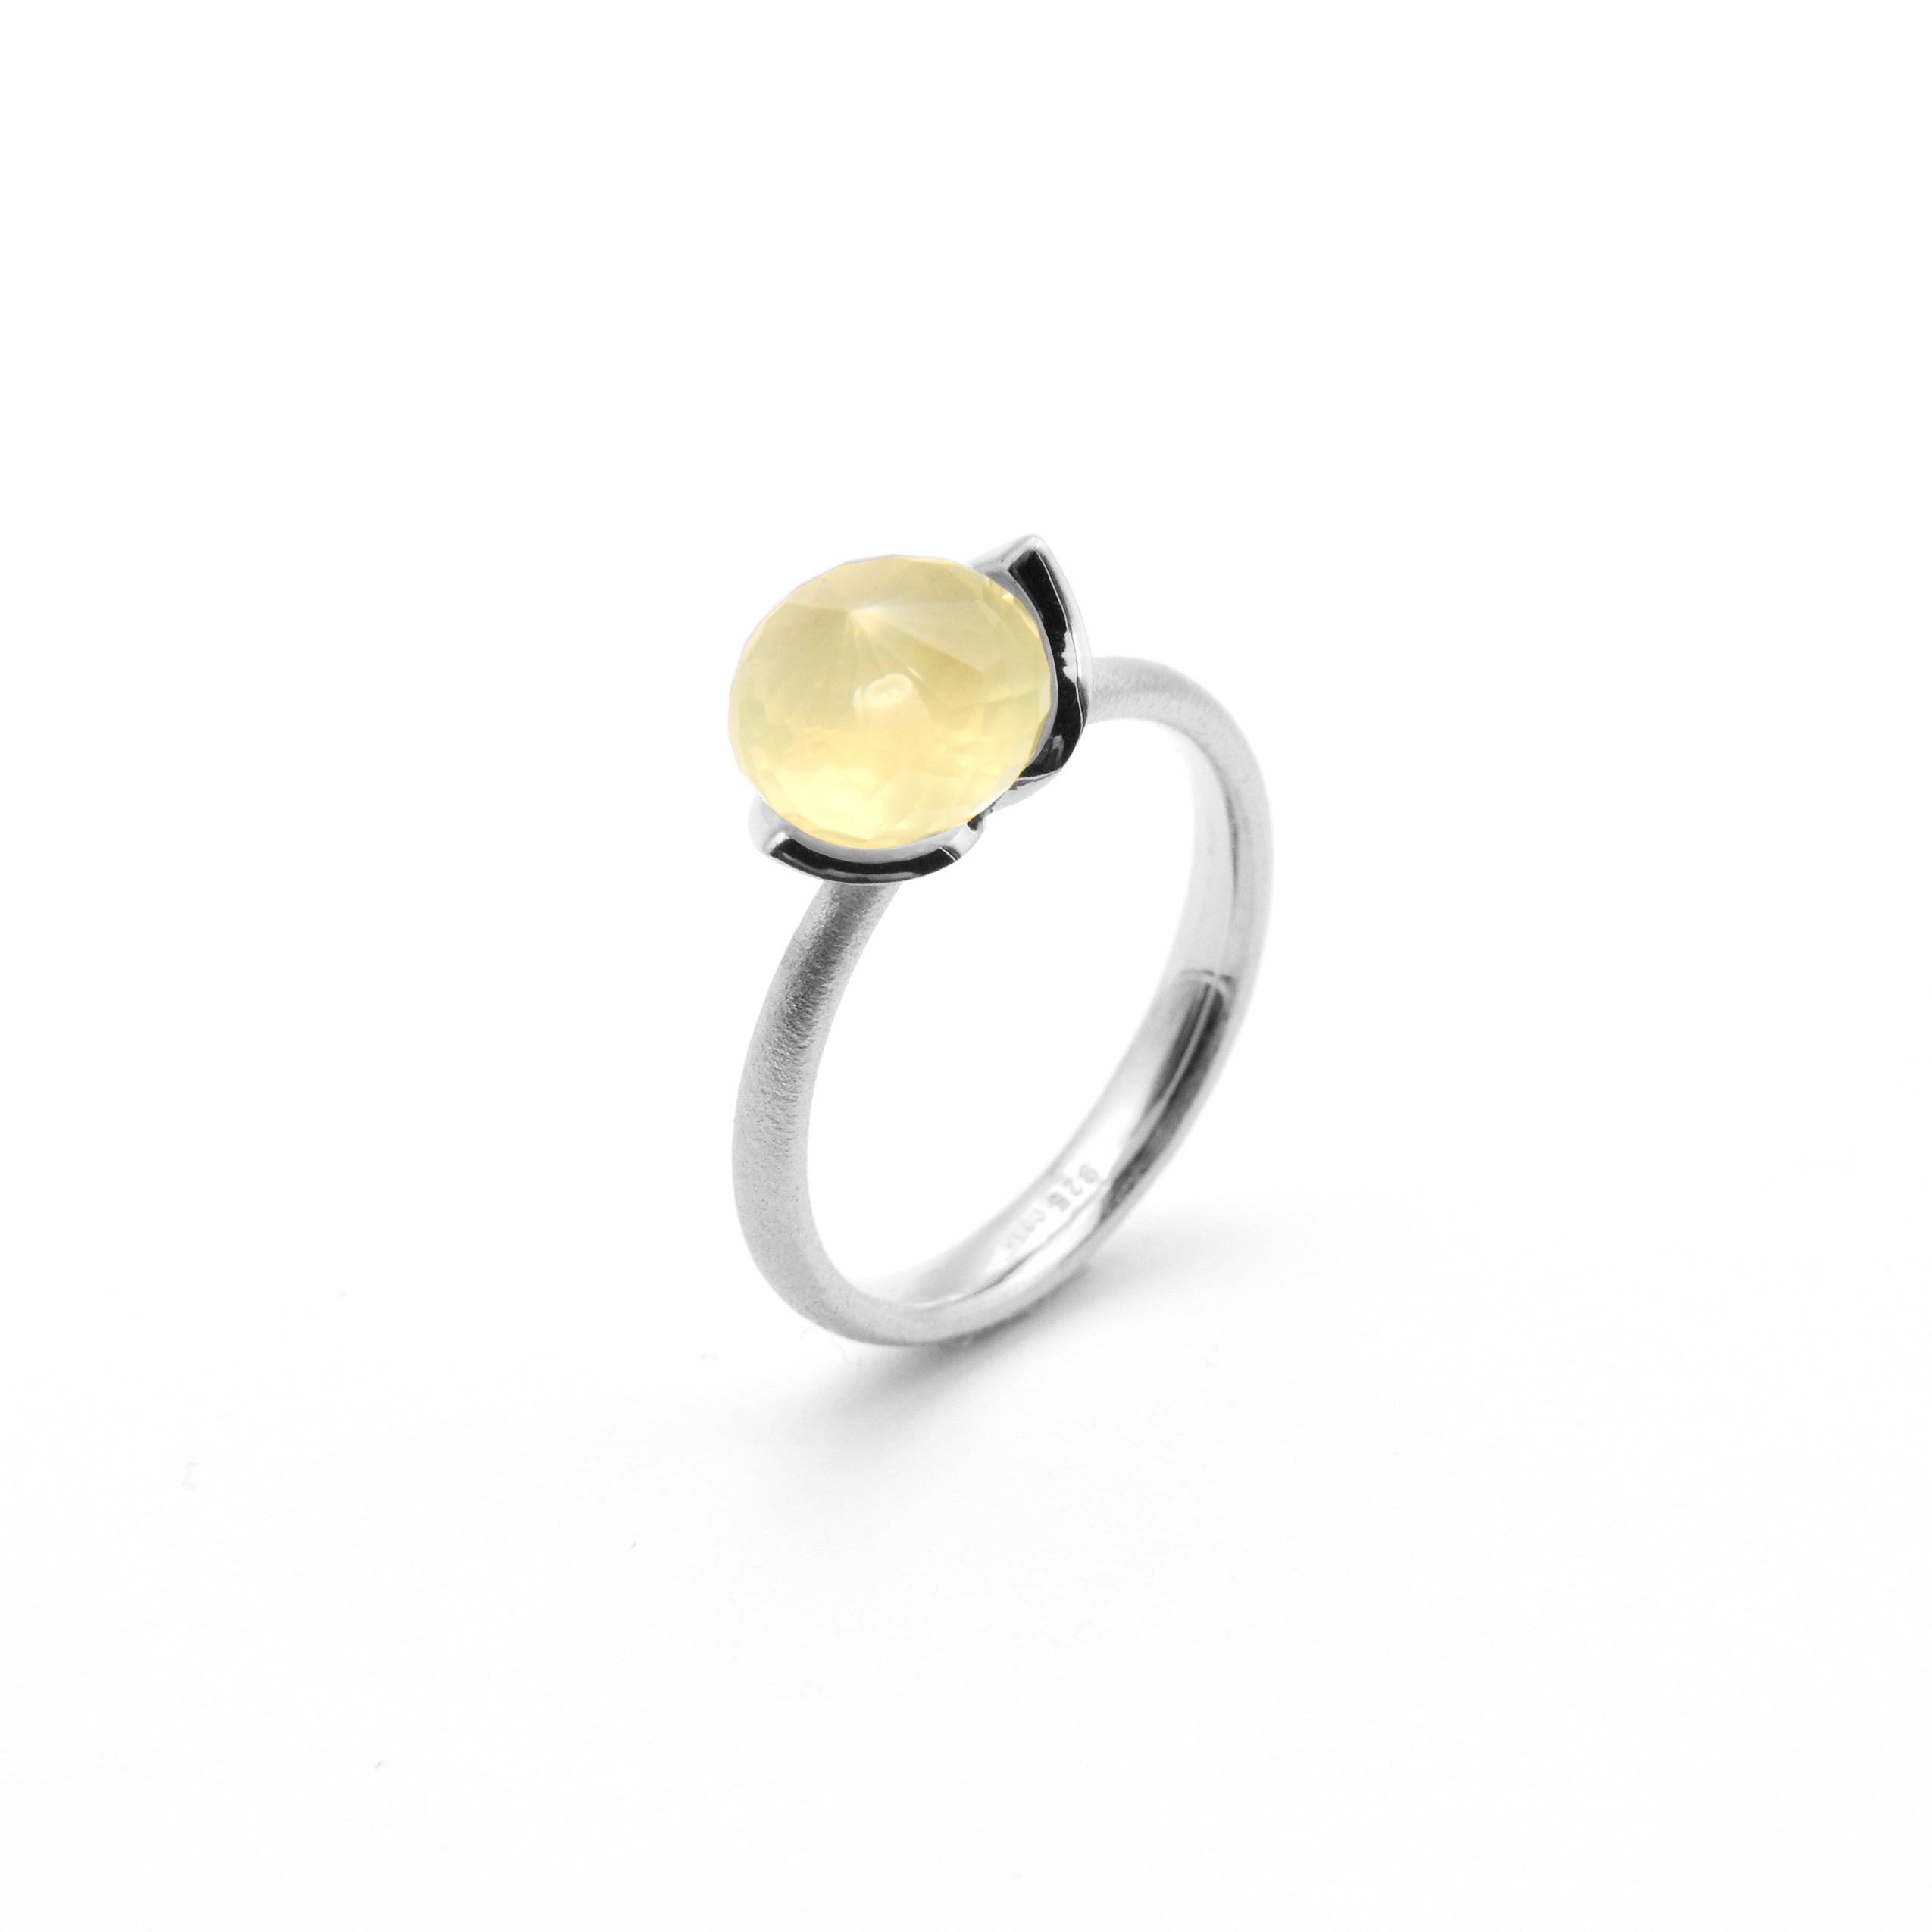 Dolce ring "smal" with lemon quartz 925/-